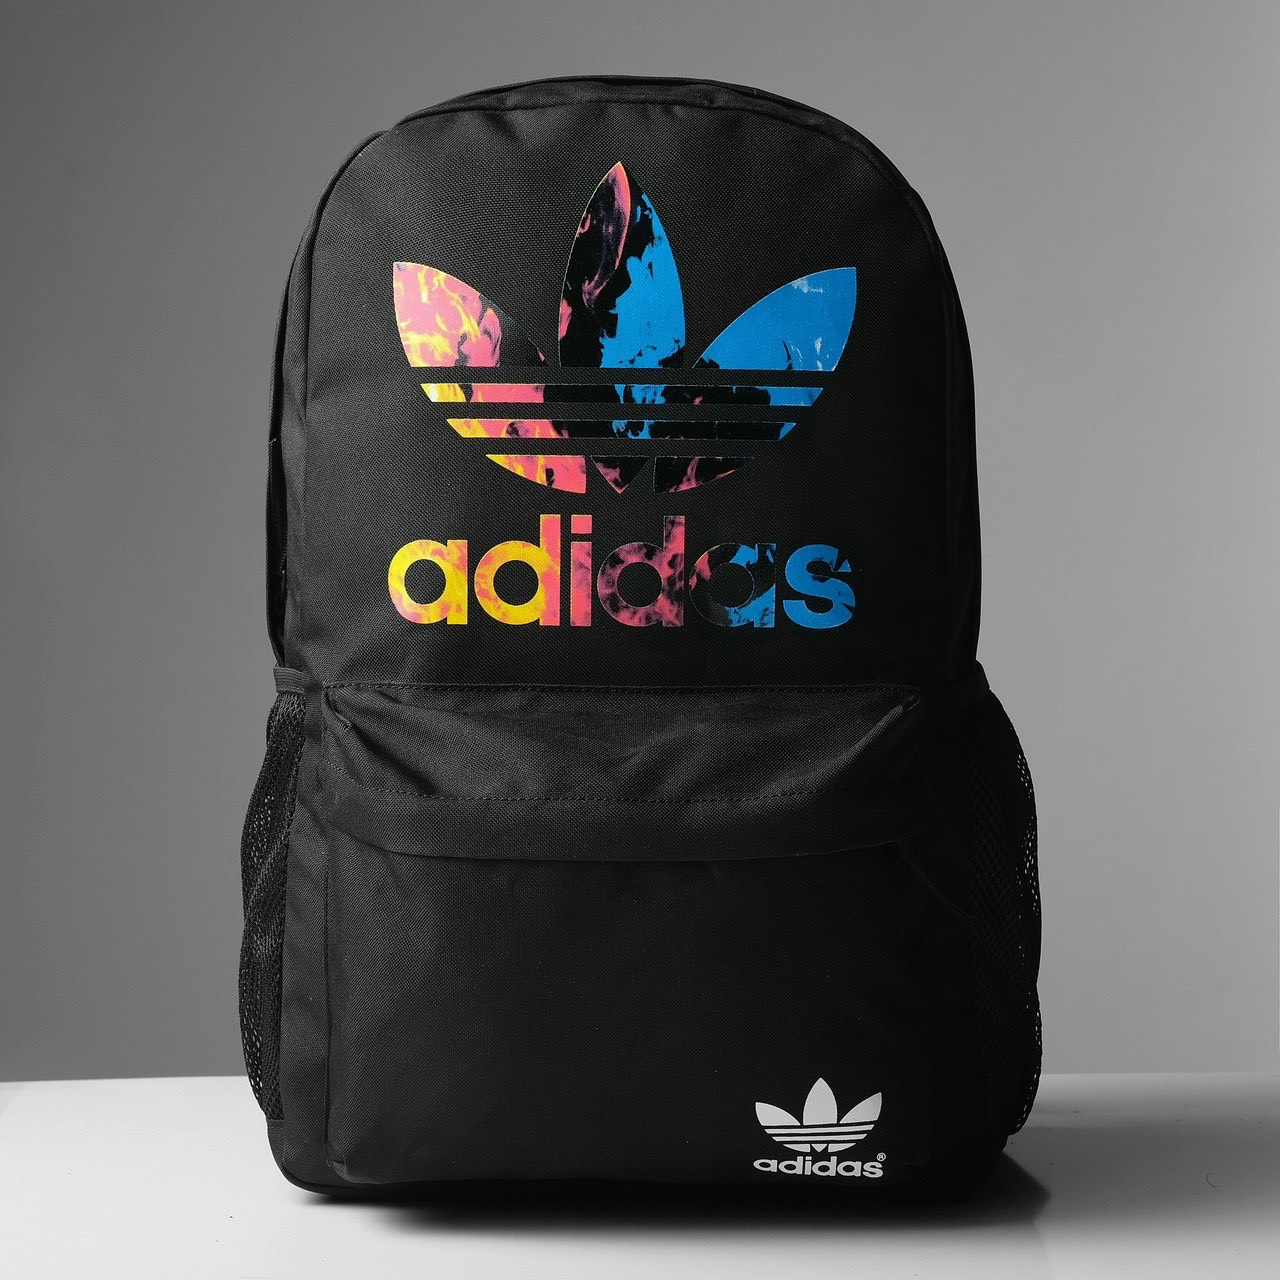 adidas Originals Adicolor Archiveloader Backpack Blue | Dressinn